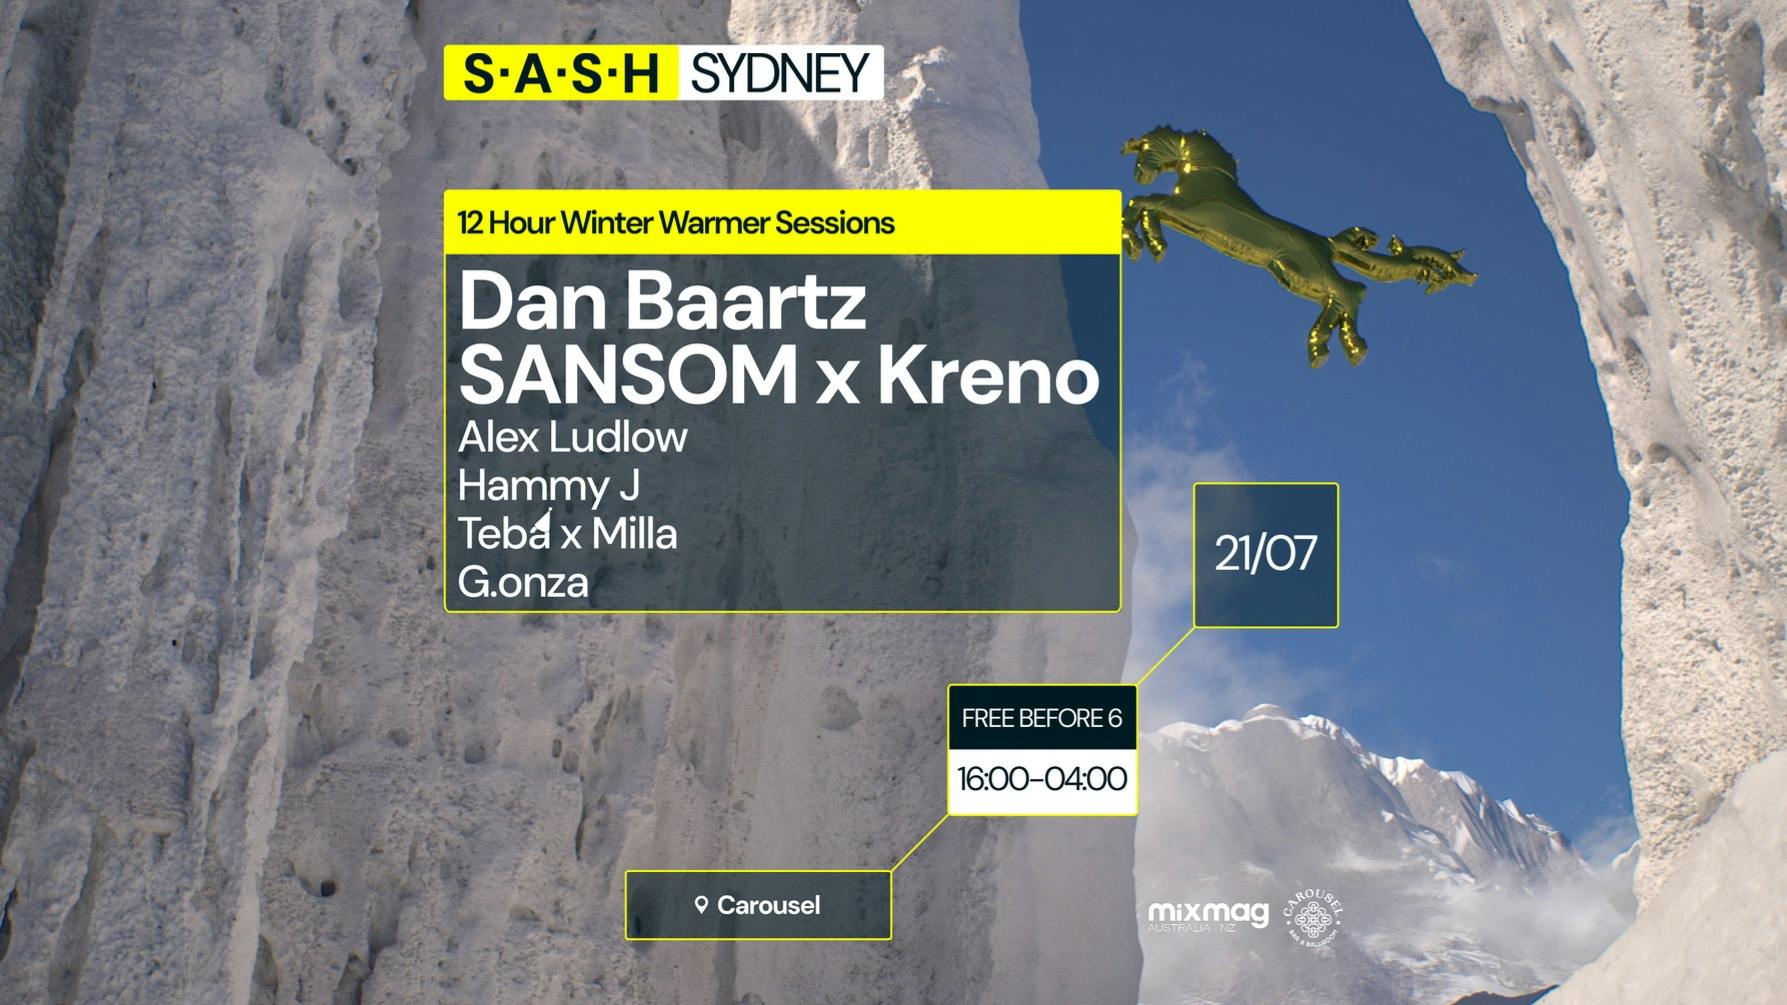 ★ S.A.S.H Sydney ★ Winter Warmer Sessions ★ Dan Baartz & SANSOM x Kreno ★ Sun 21st July ★